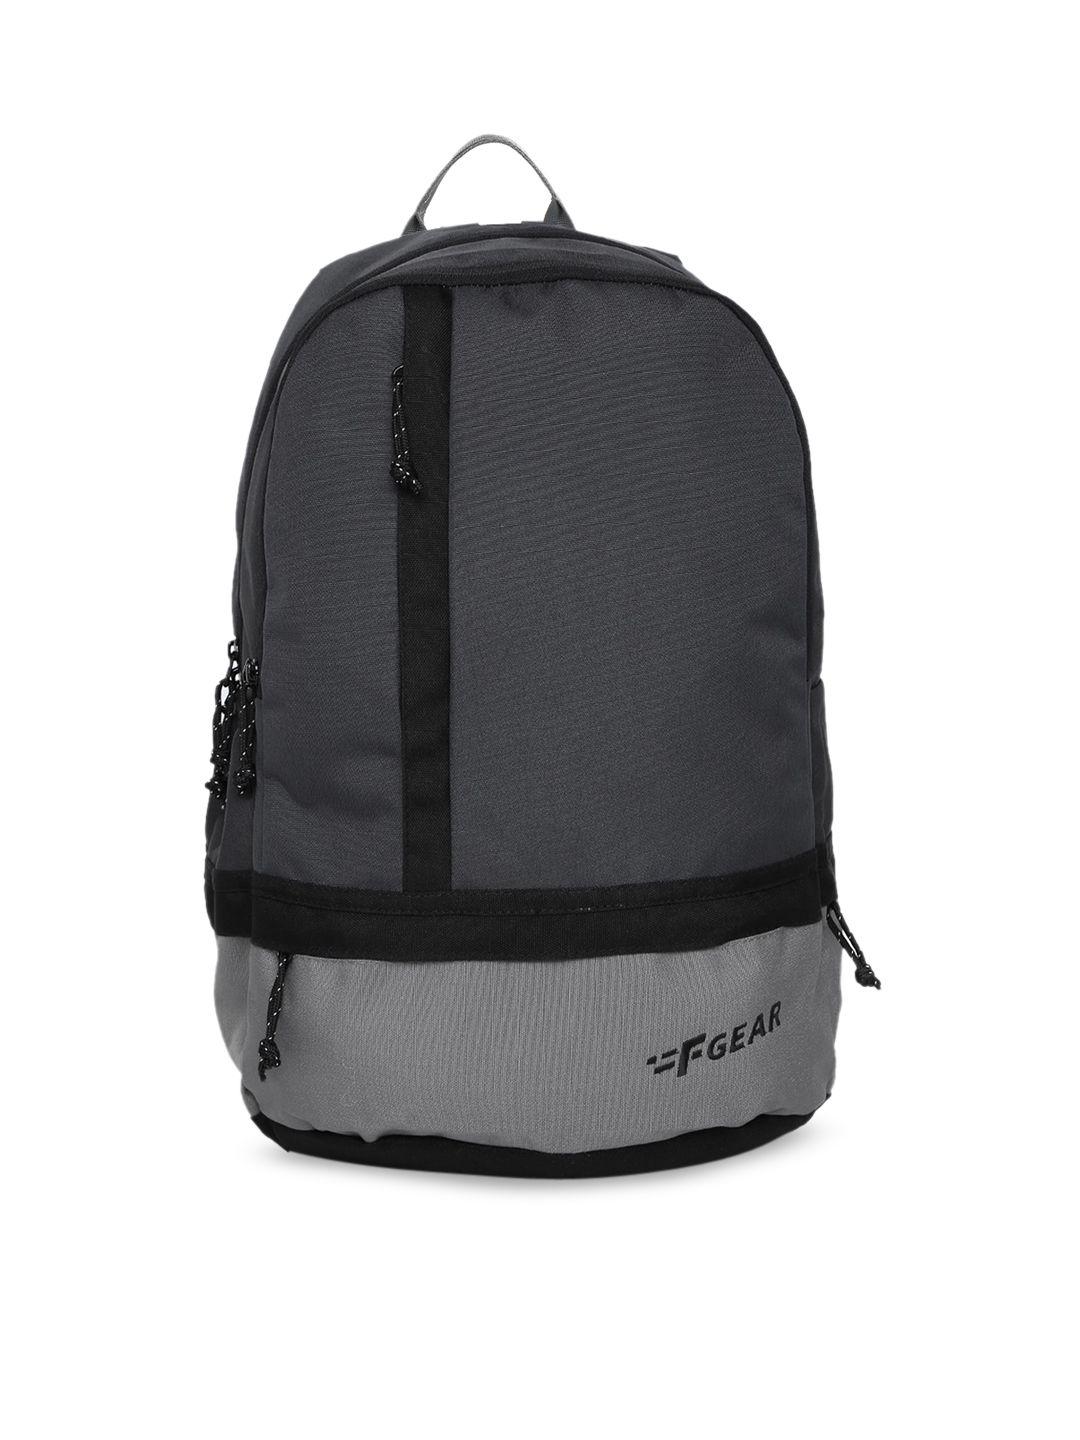 f gear unisex grey colourblocked backpack